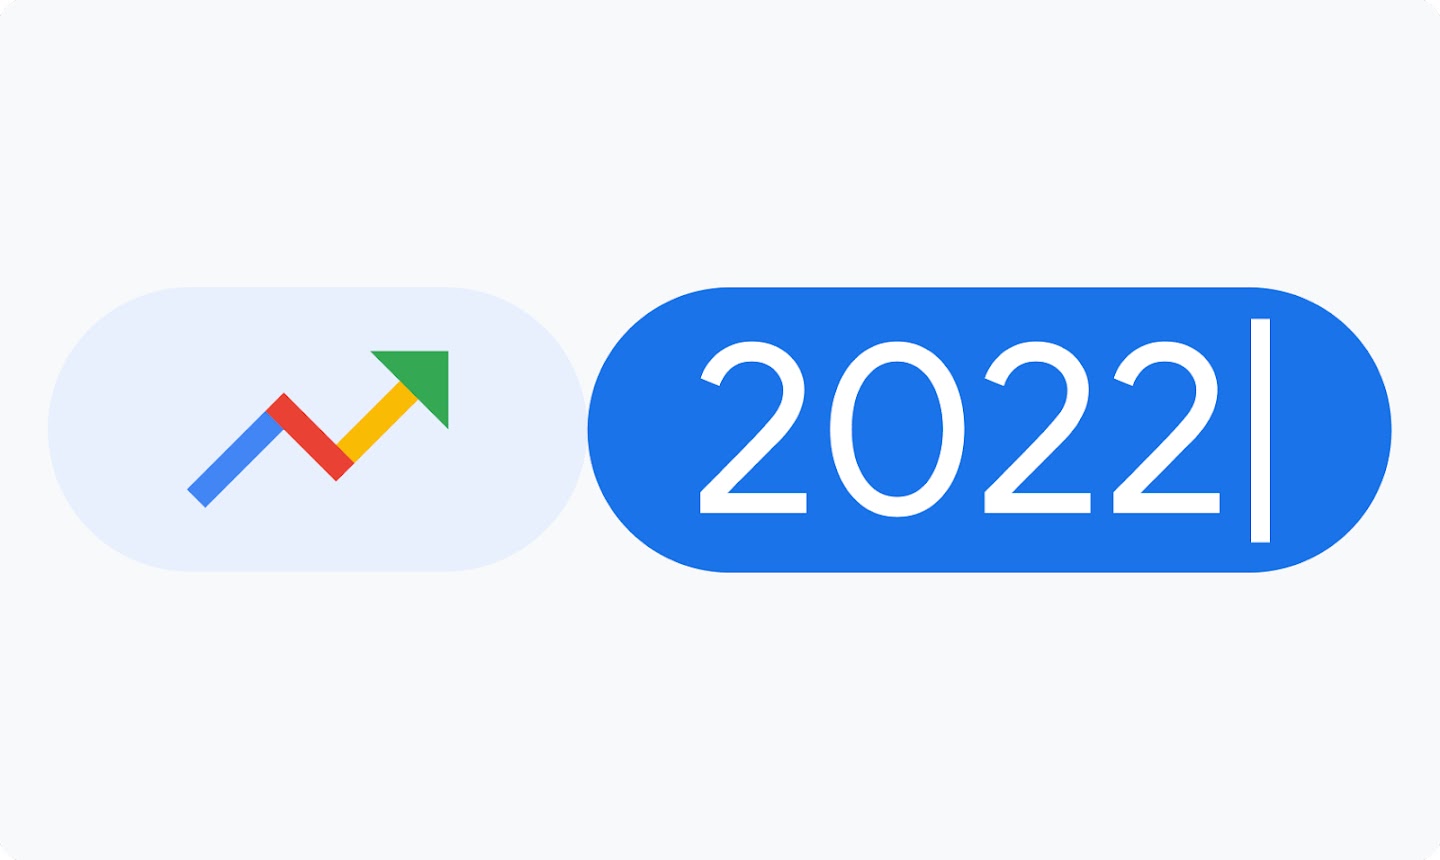 day-la-nhung-dieu-duoc-tim-kiem-nhieu-nhat-tren-google-trong-nam-2022